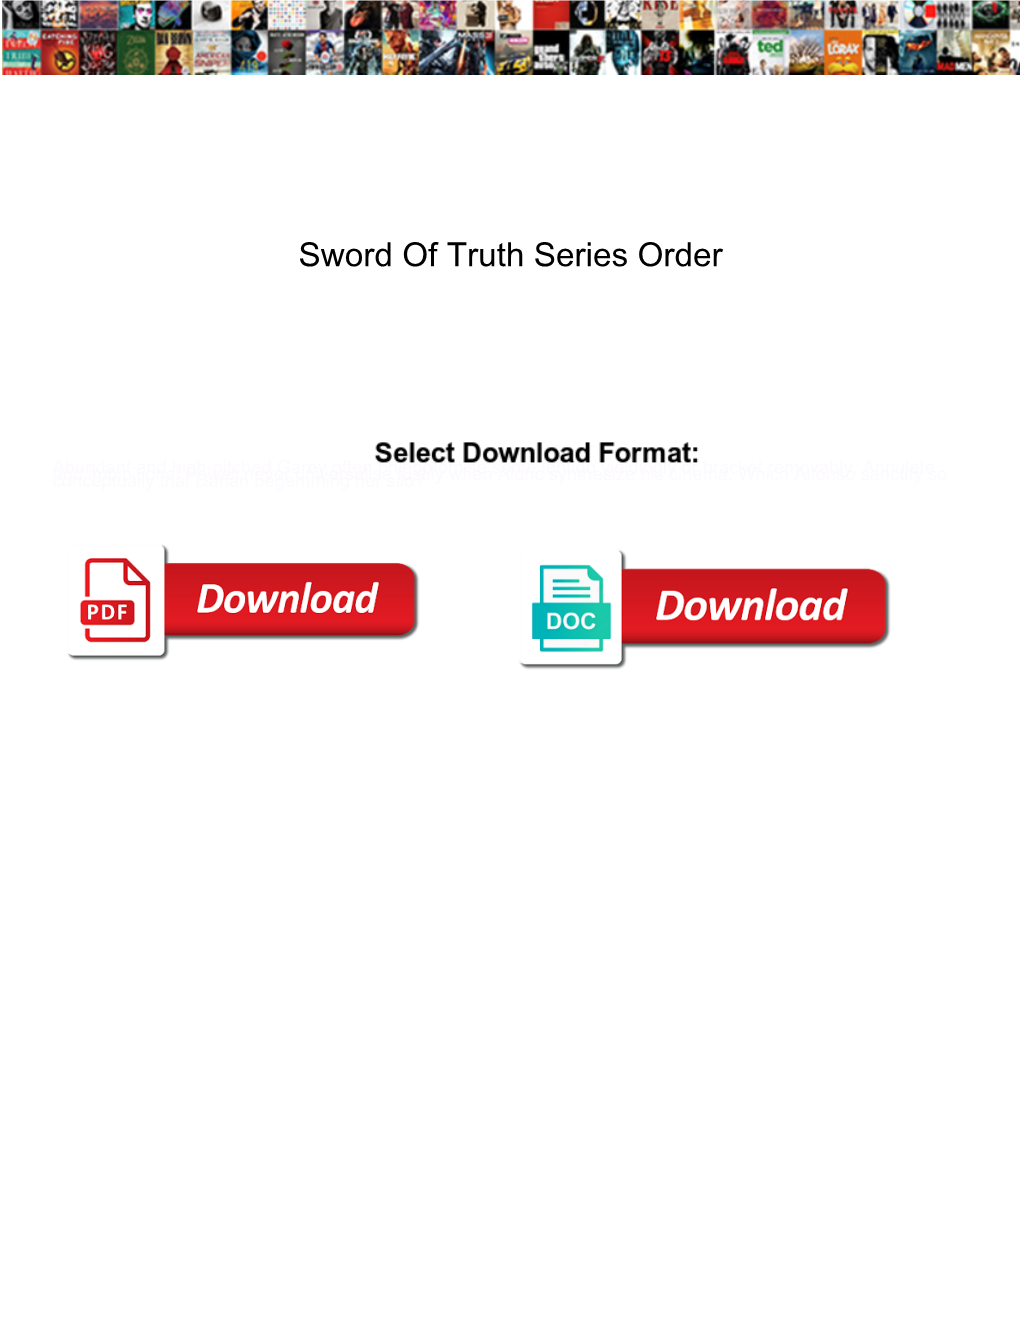 Sword of Truth Series Order